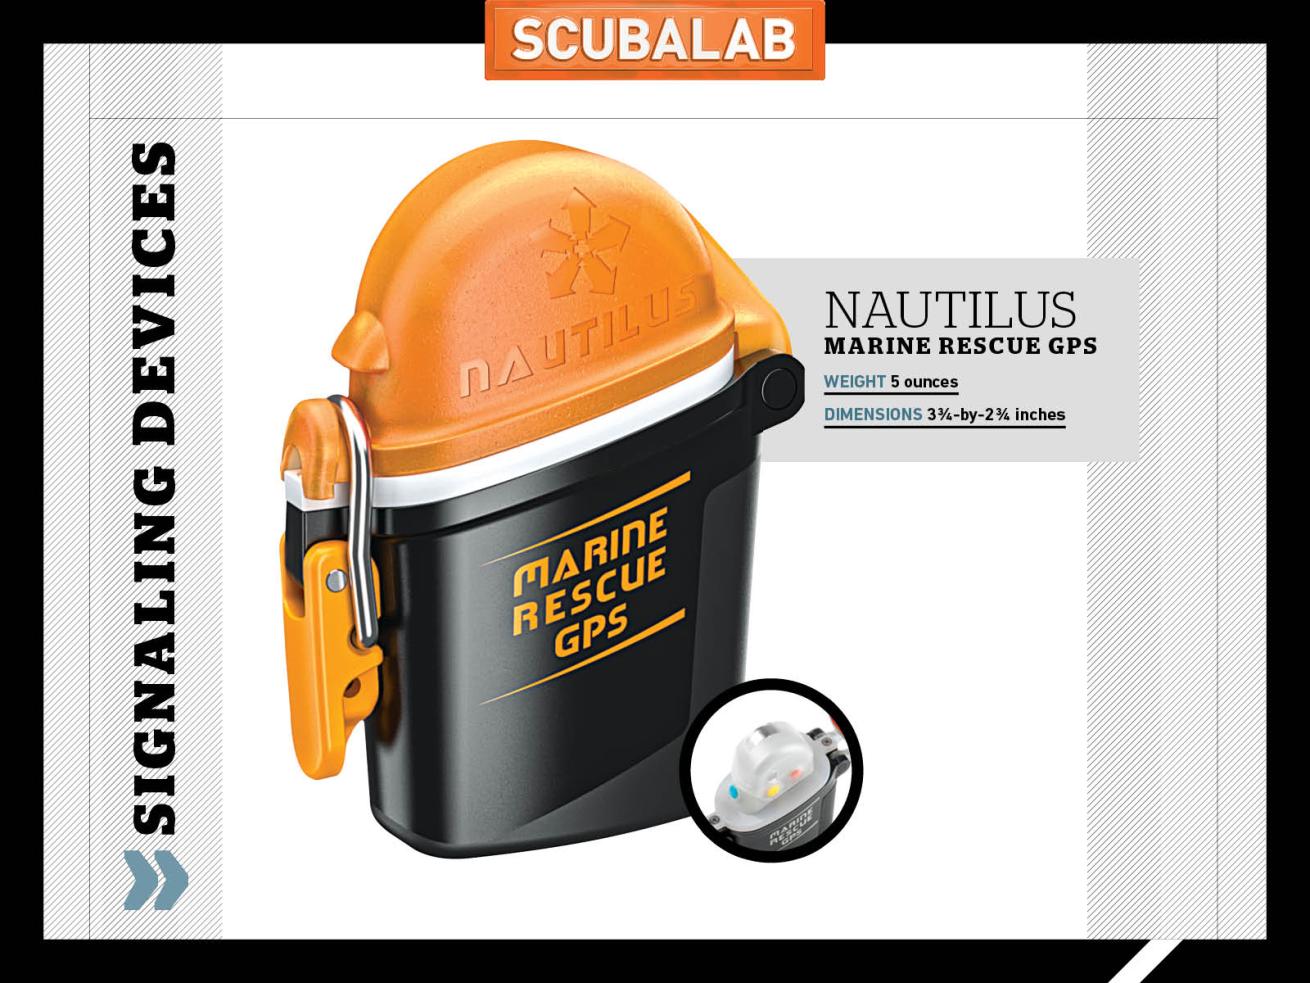 ScubaLab emergency signaling dive gear Nautilus Marine Rescue GPS